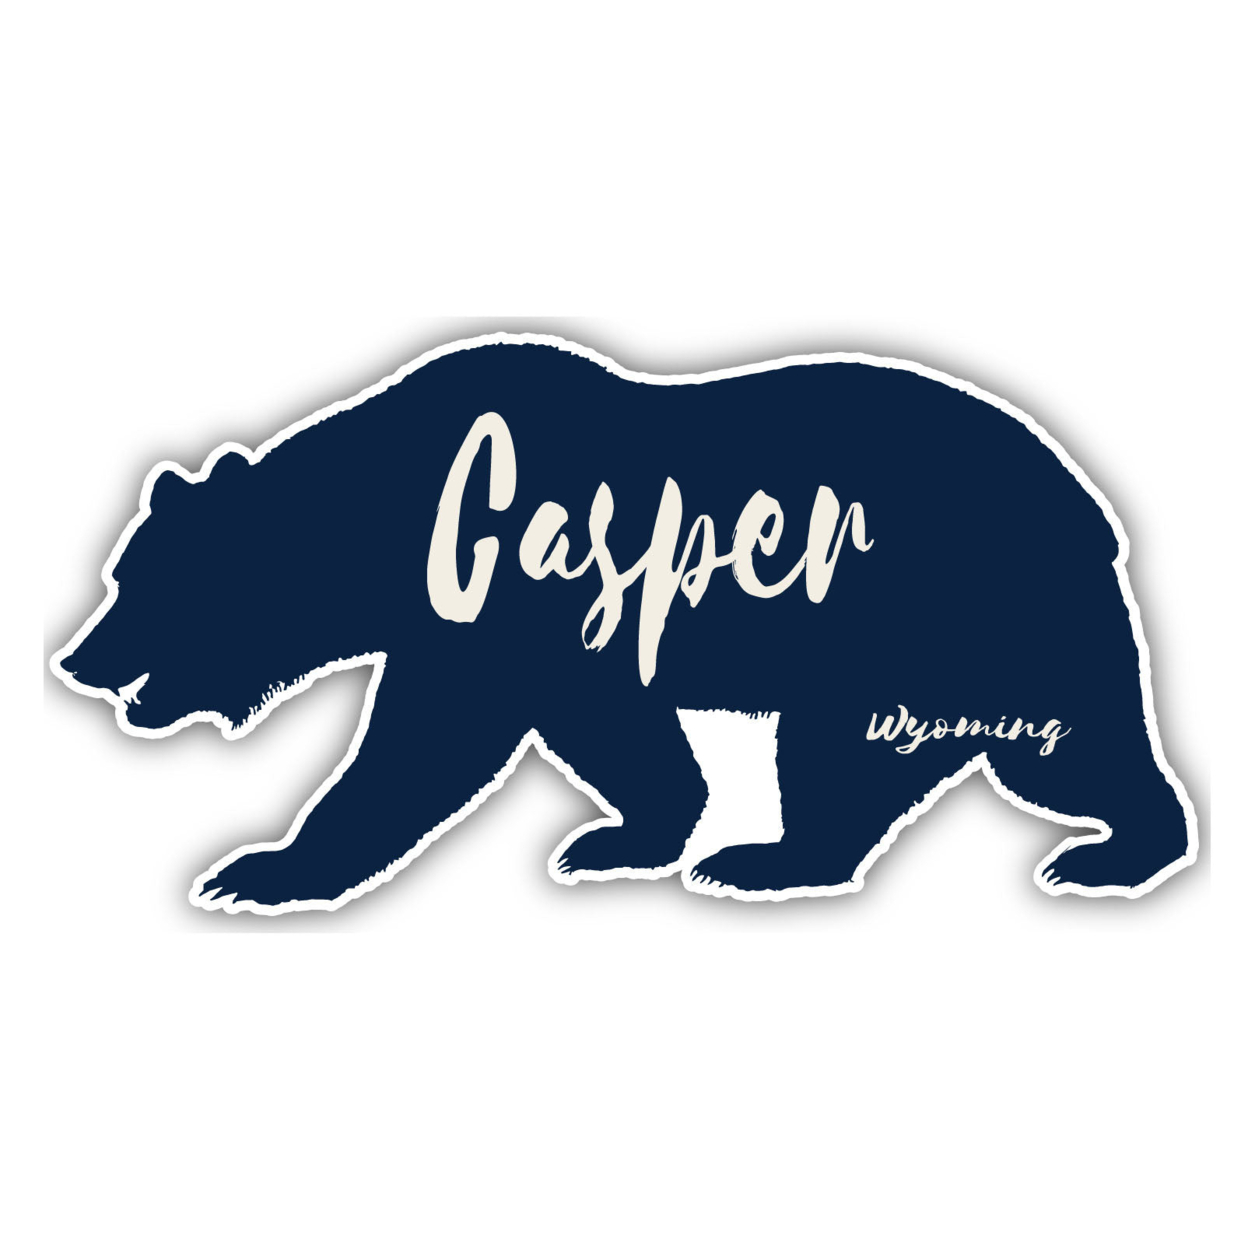 Casper Wyoming Souvenir Decorative Stickers (Choose Theme And Size) - Single Unit, 8-Inch, Camp Life